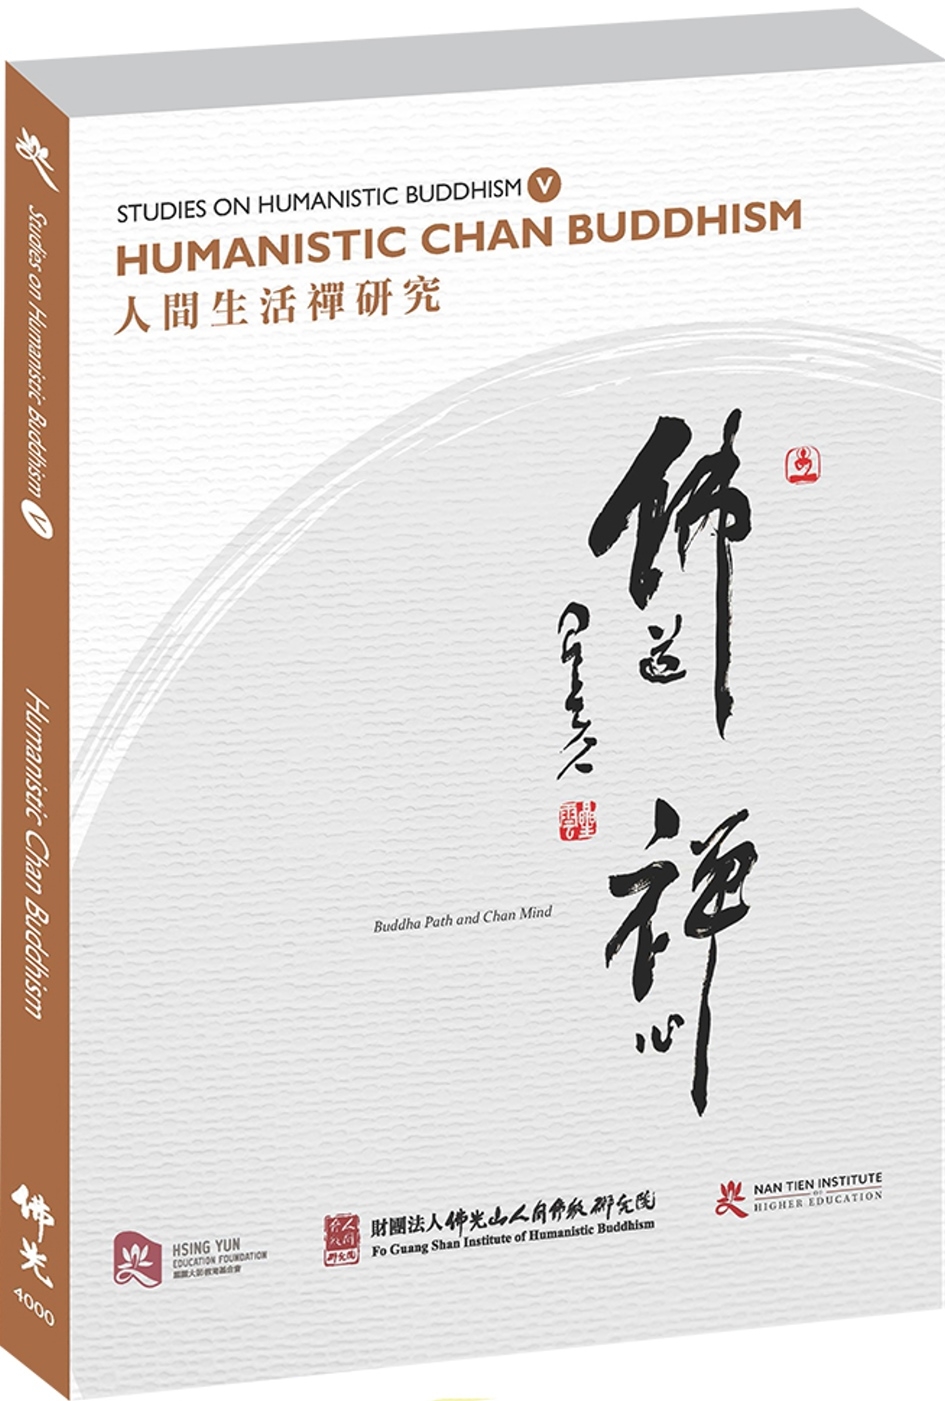 Studies on Humanistic Buddhism V: Humanistic Chan Buddhism 人間生活禪研究